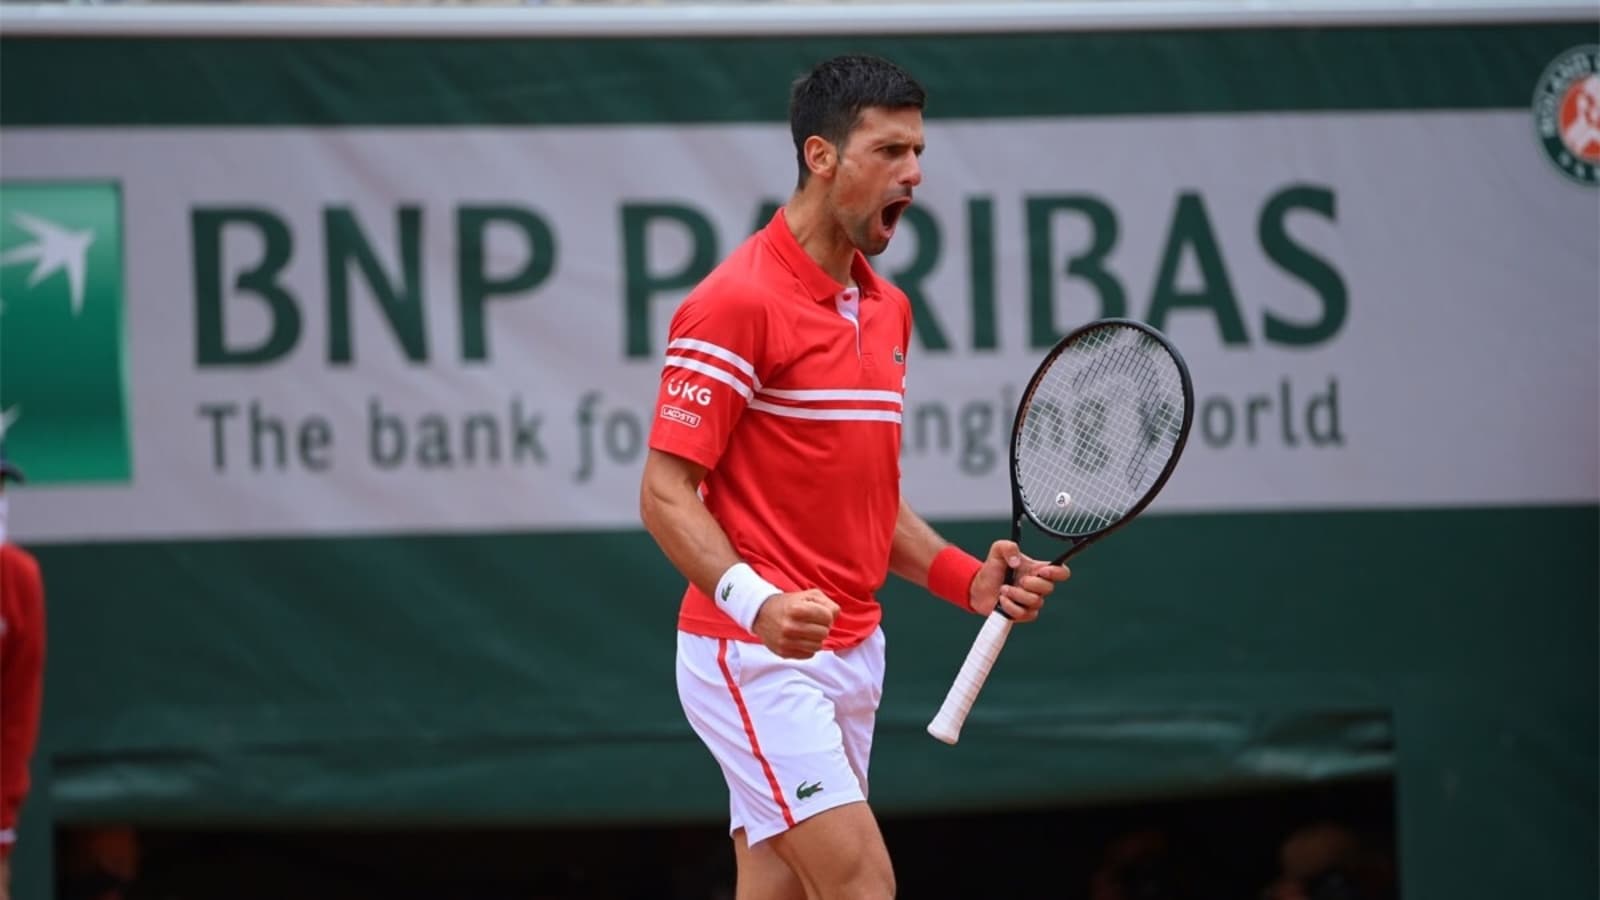 French Open 2021: Djokovic Fights Off Berrettini To Set Up Nadal Semi Final